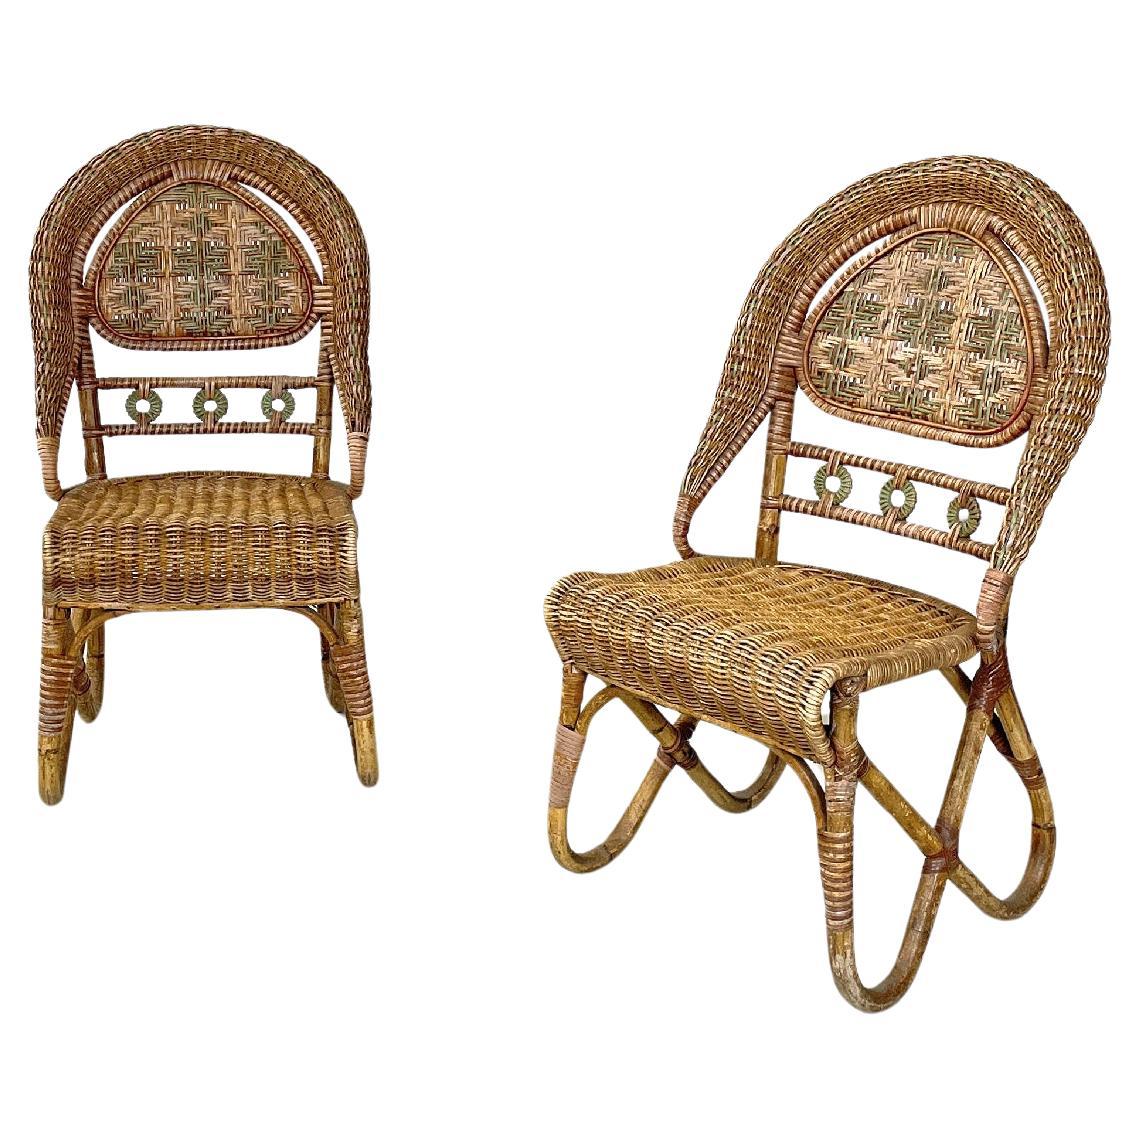 Italian antique rattan chairs by Mongiardino and Bonacina for Bonacina, 1900s